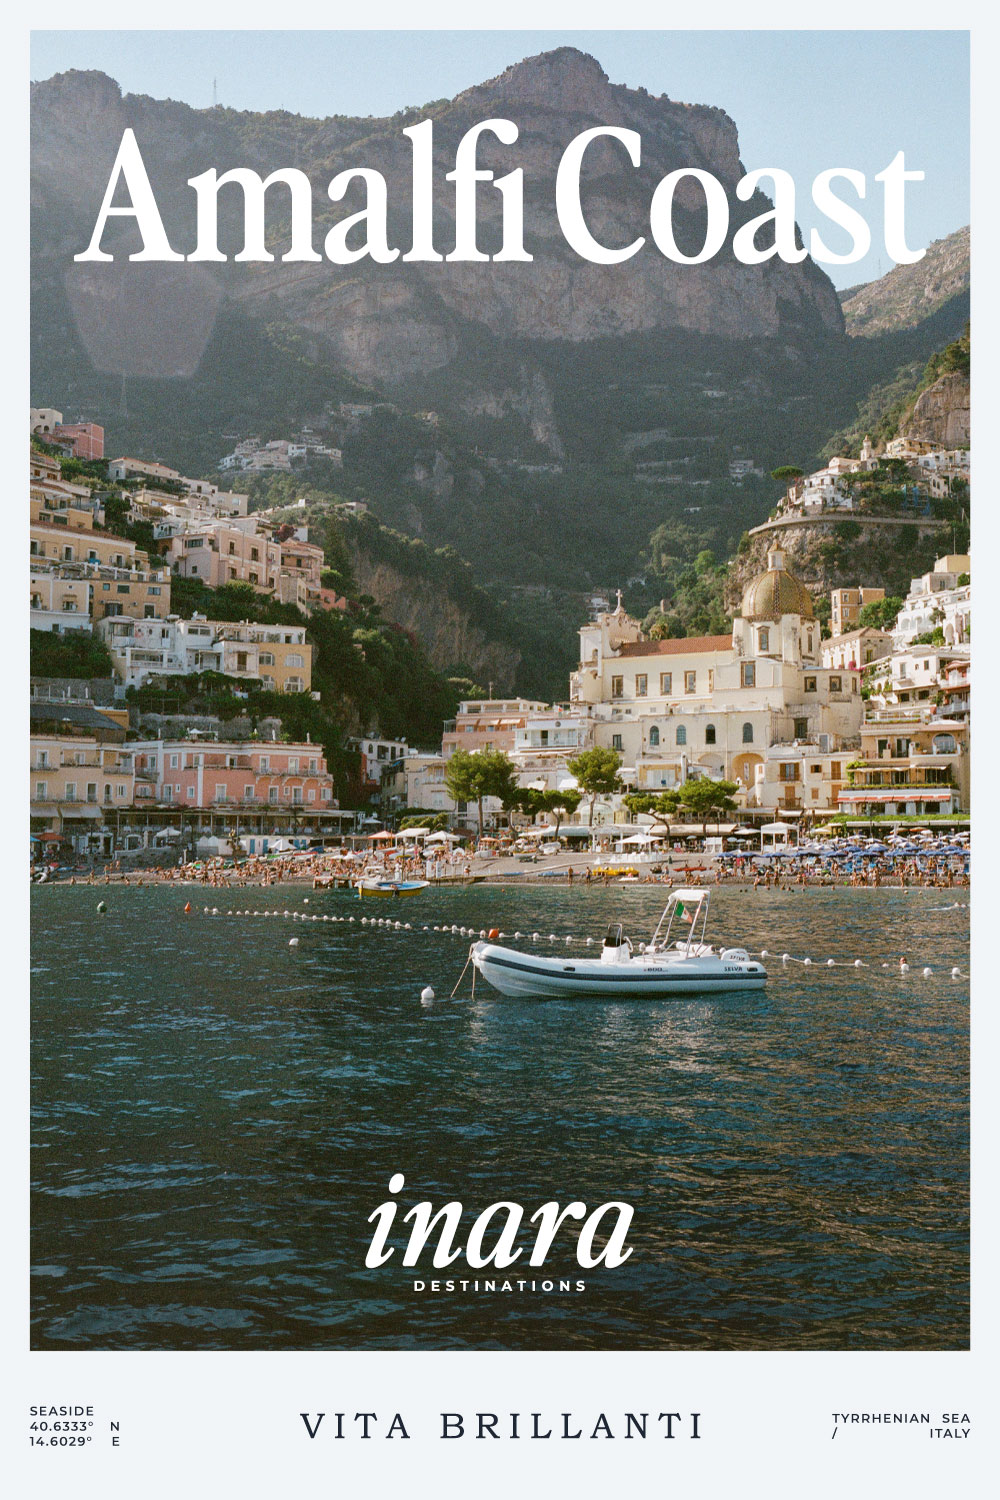 AmalfiCoast destination cover